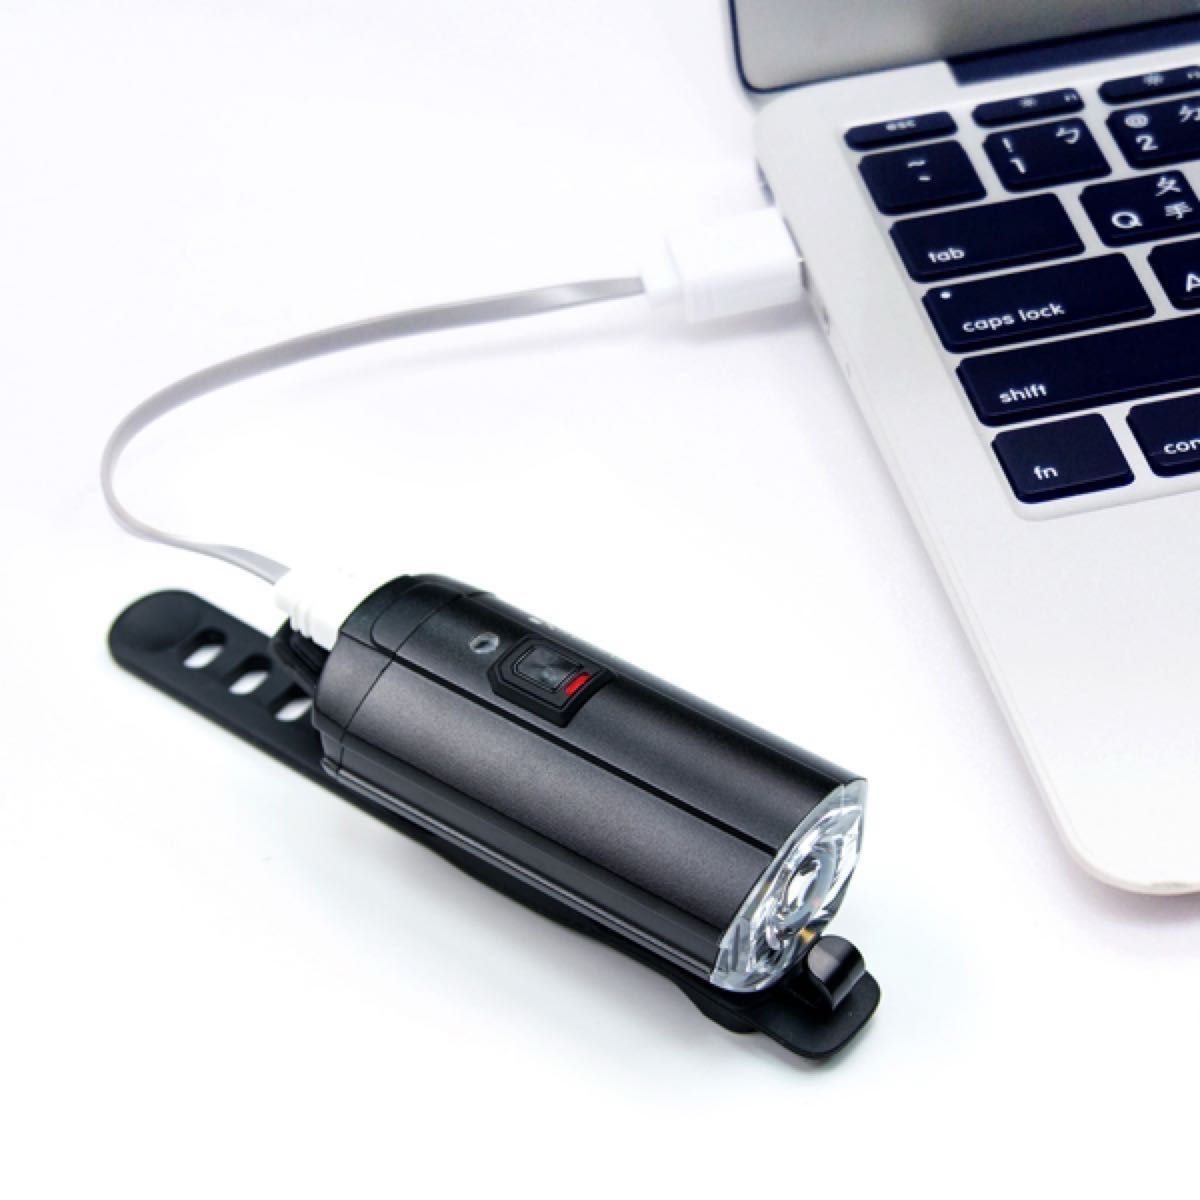 INFINI インフィニ TRON 500 ハイパワーホワイトLEDヘッドライト★オートモード搭載・USB充電式